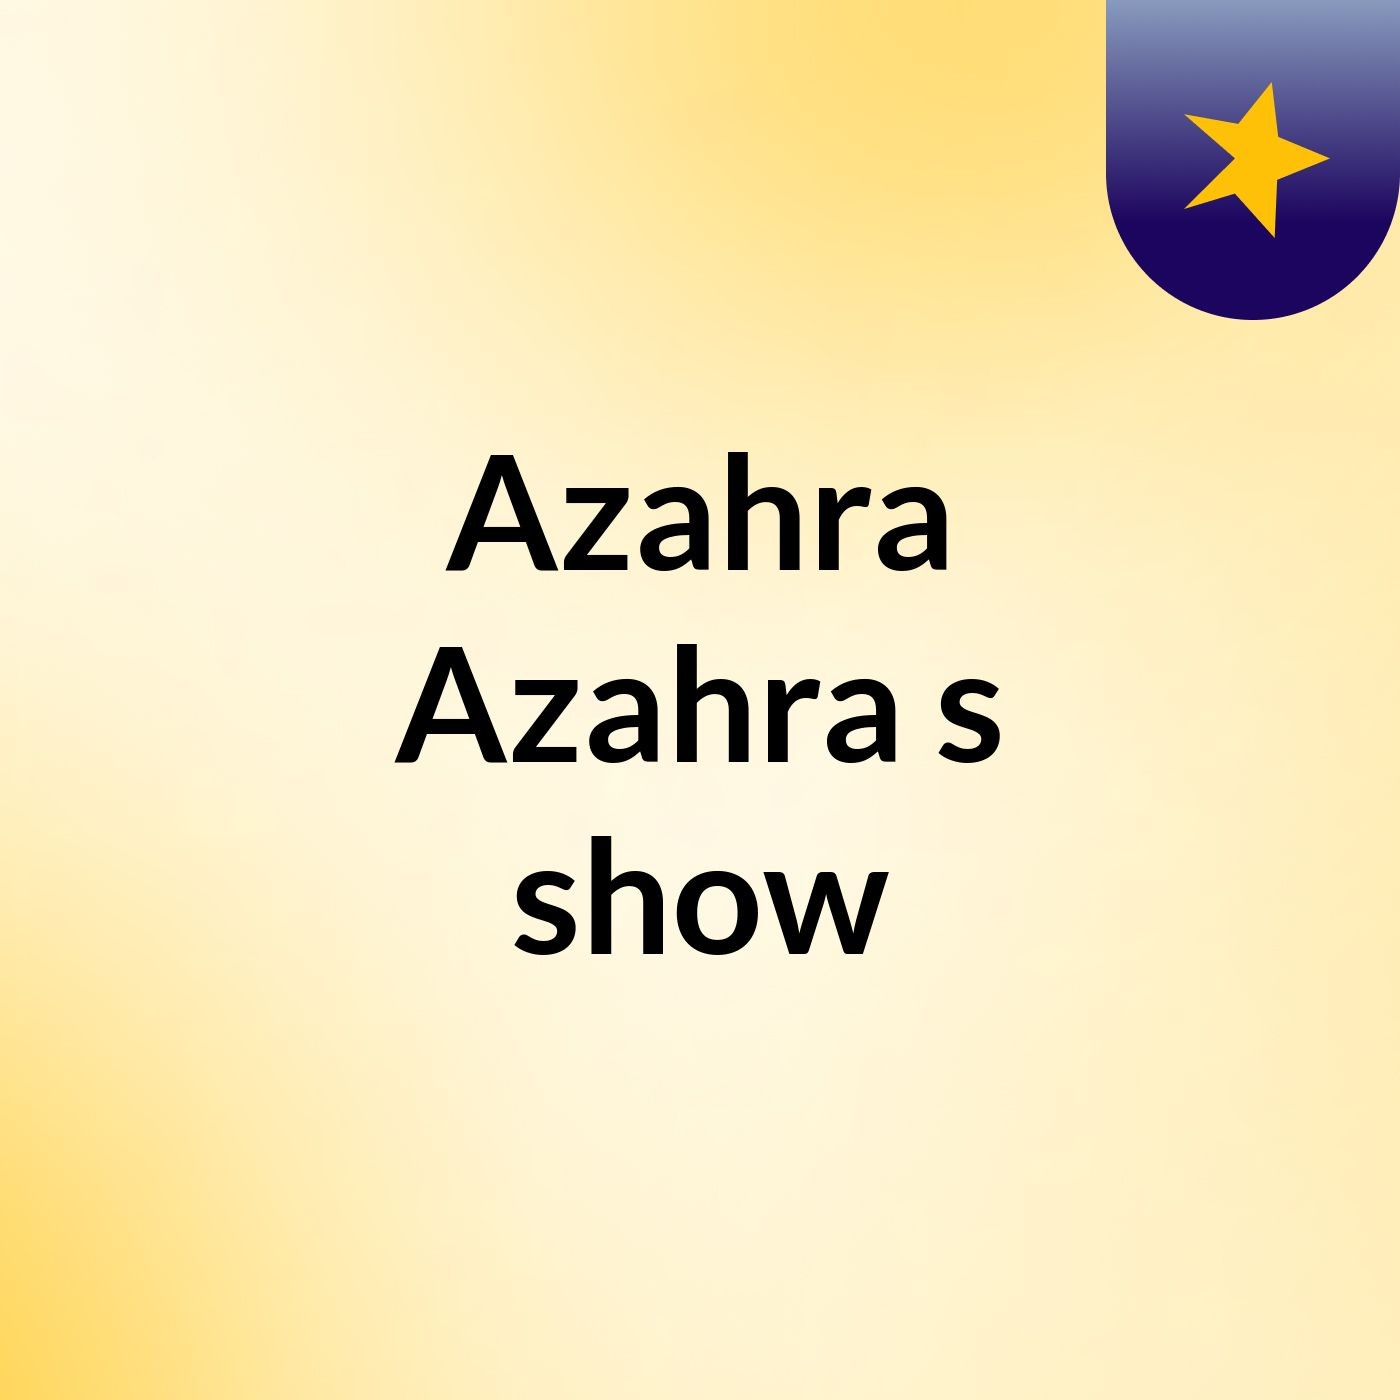 Azahra Azahra's show